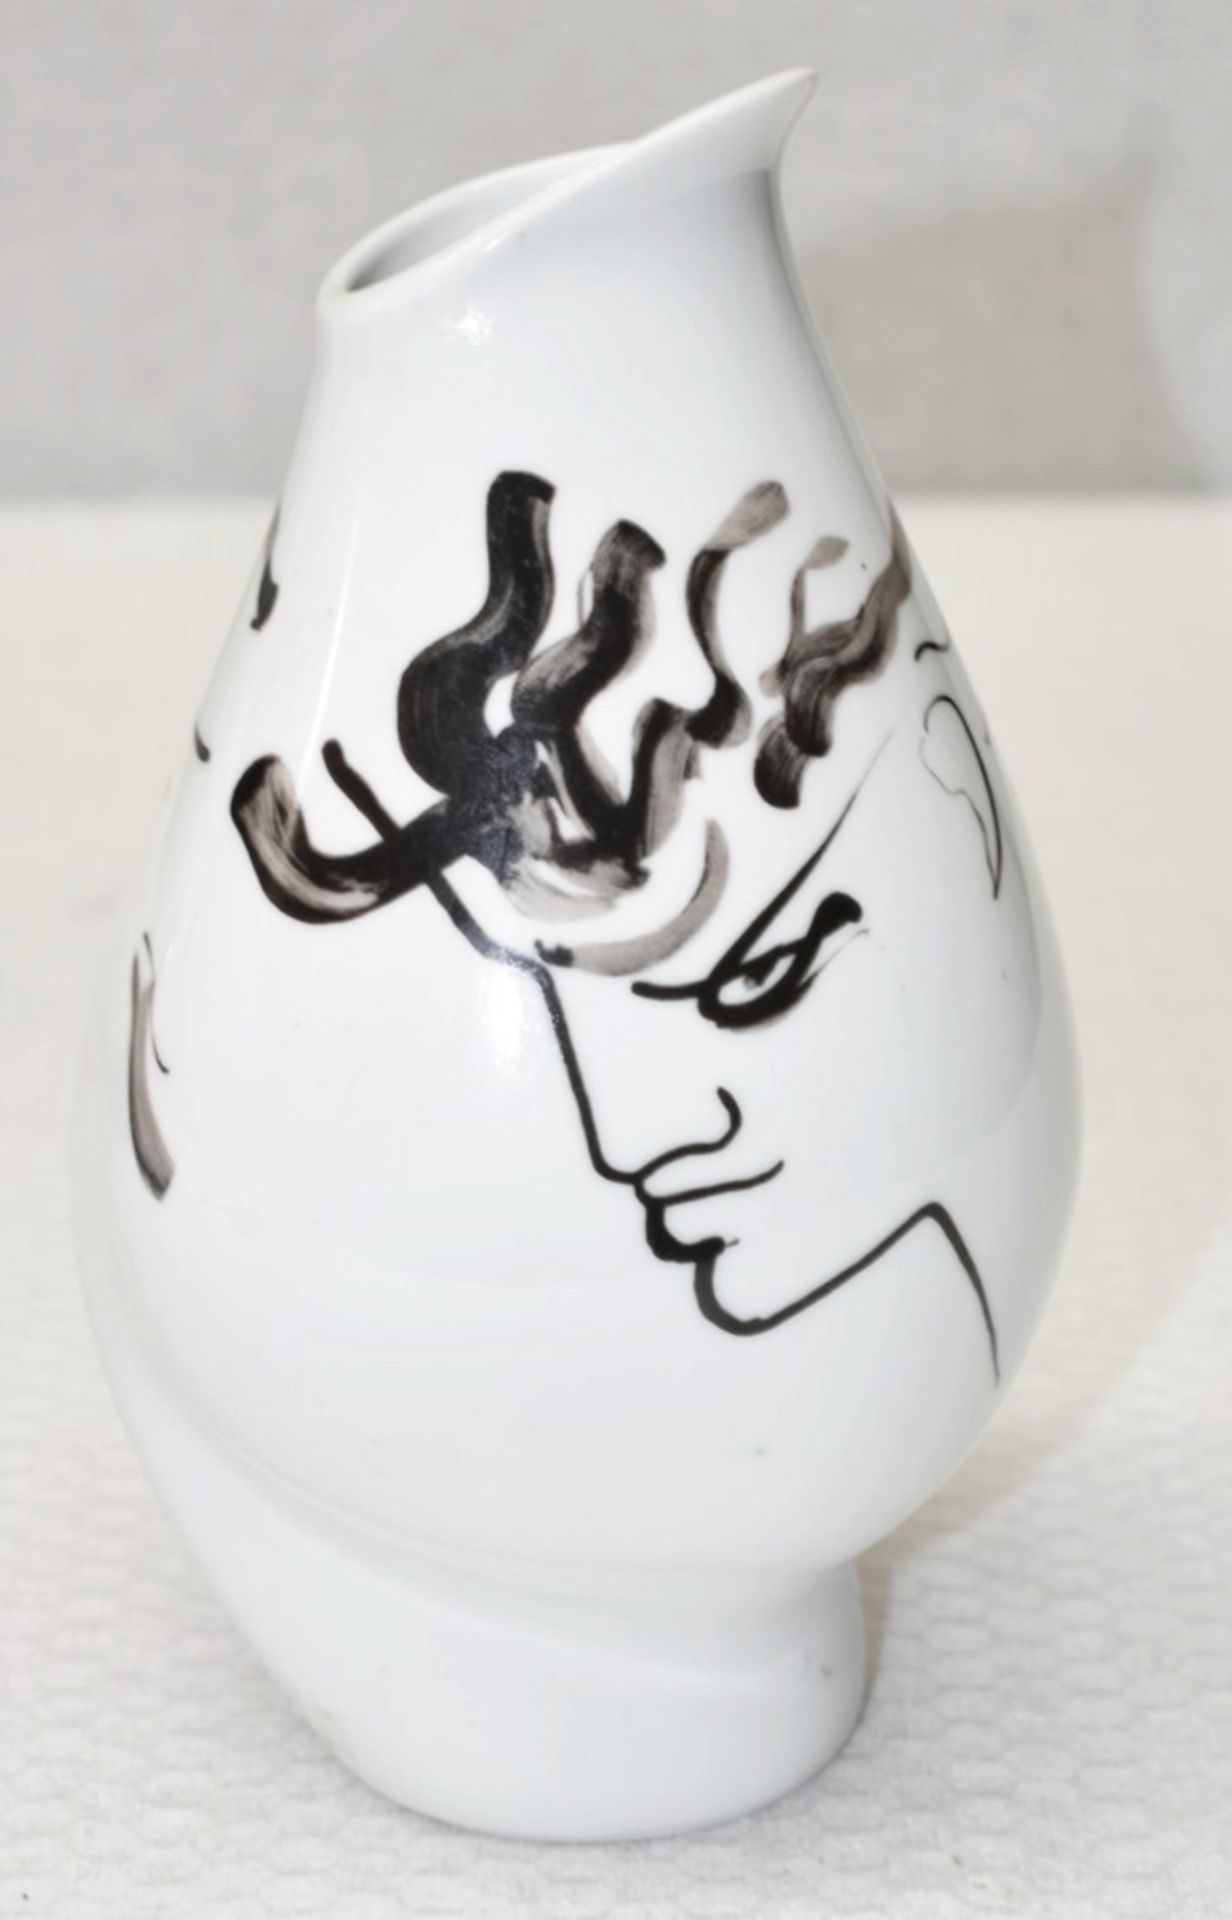 1 x JEAN COCTEAU / ROSENTHAL 'Tetes Face' Sculptural Glazed Porcelain Art Vase, 22cm - Circa 1970 - Image 5 of 10